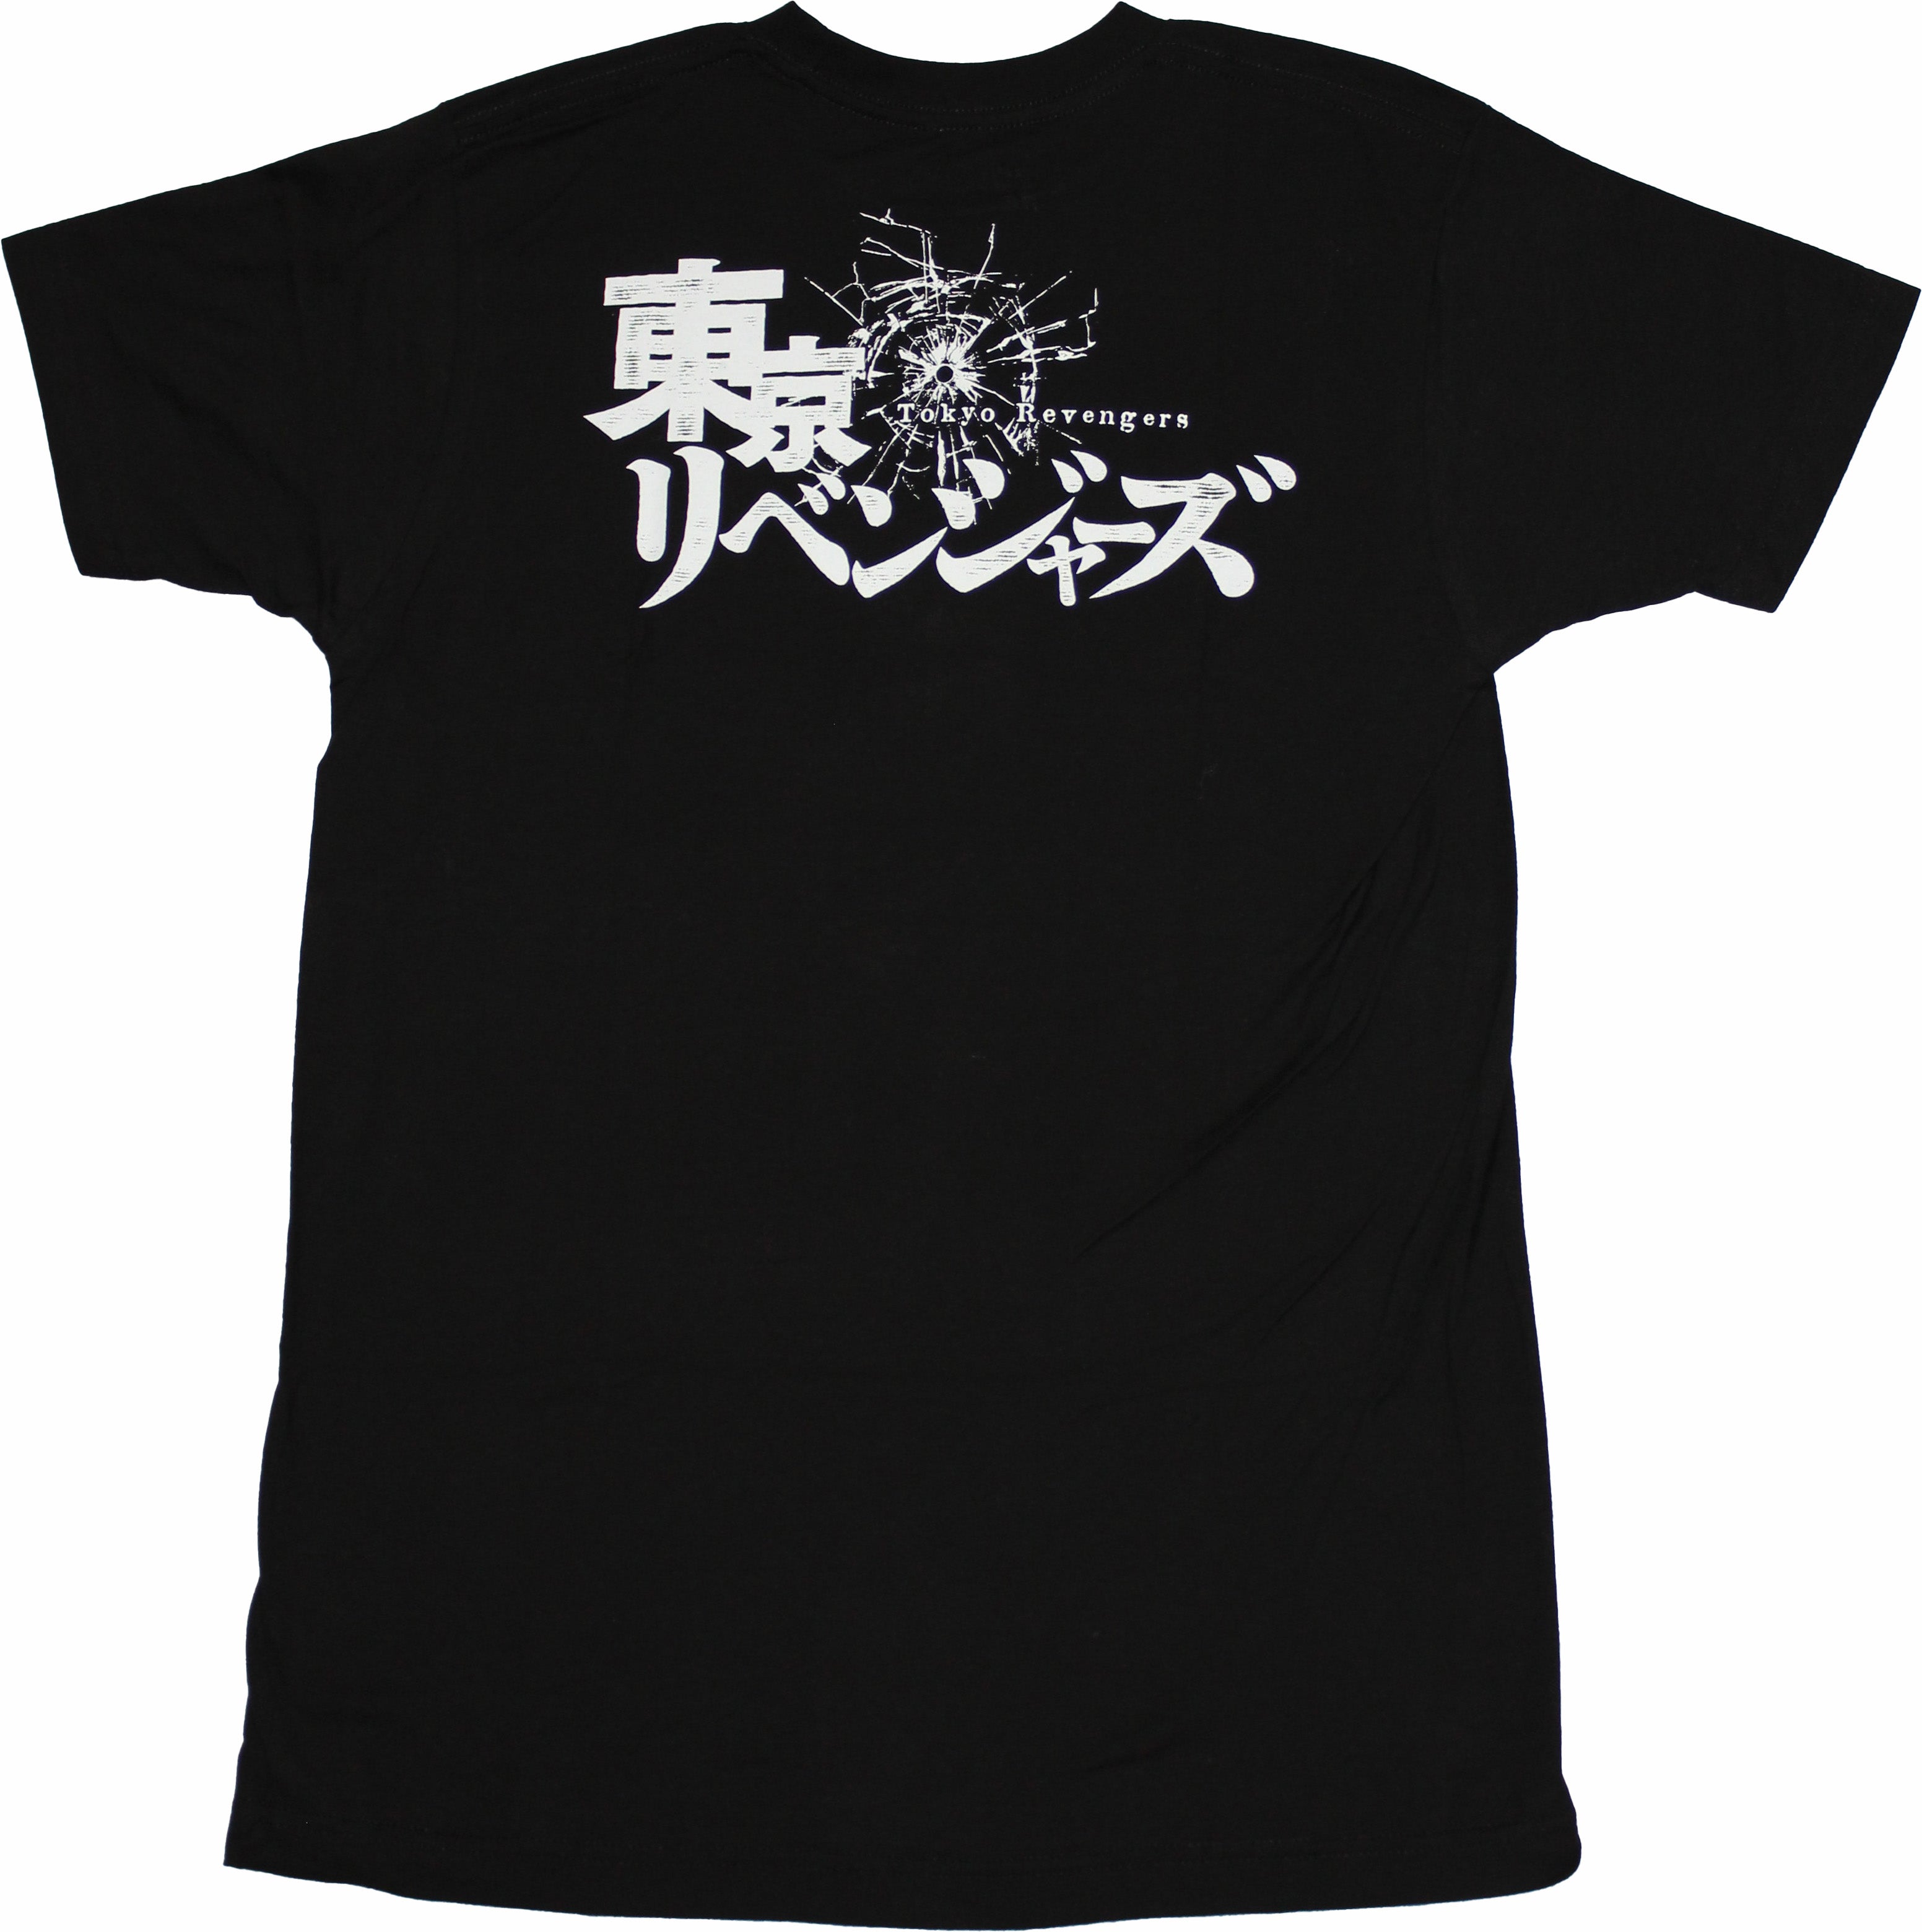 Tokyo Revengers Mens T-Shirt - Fiery Takamichi Image